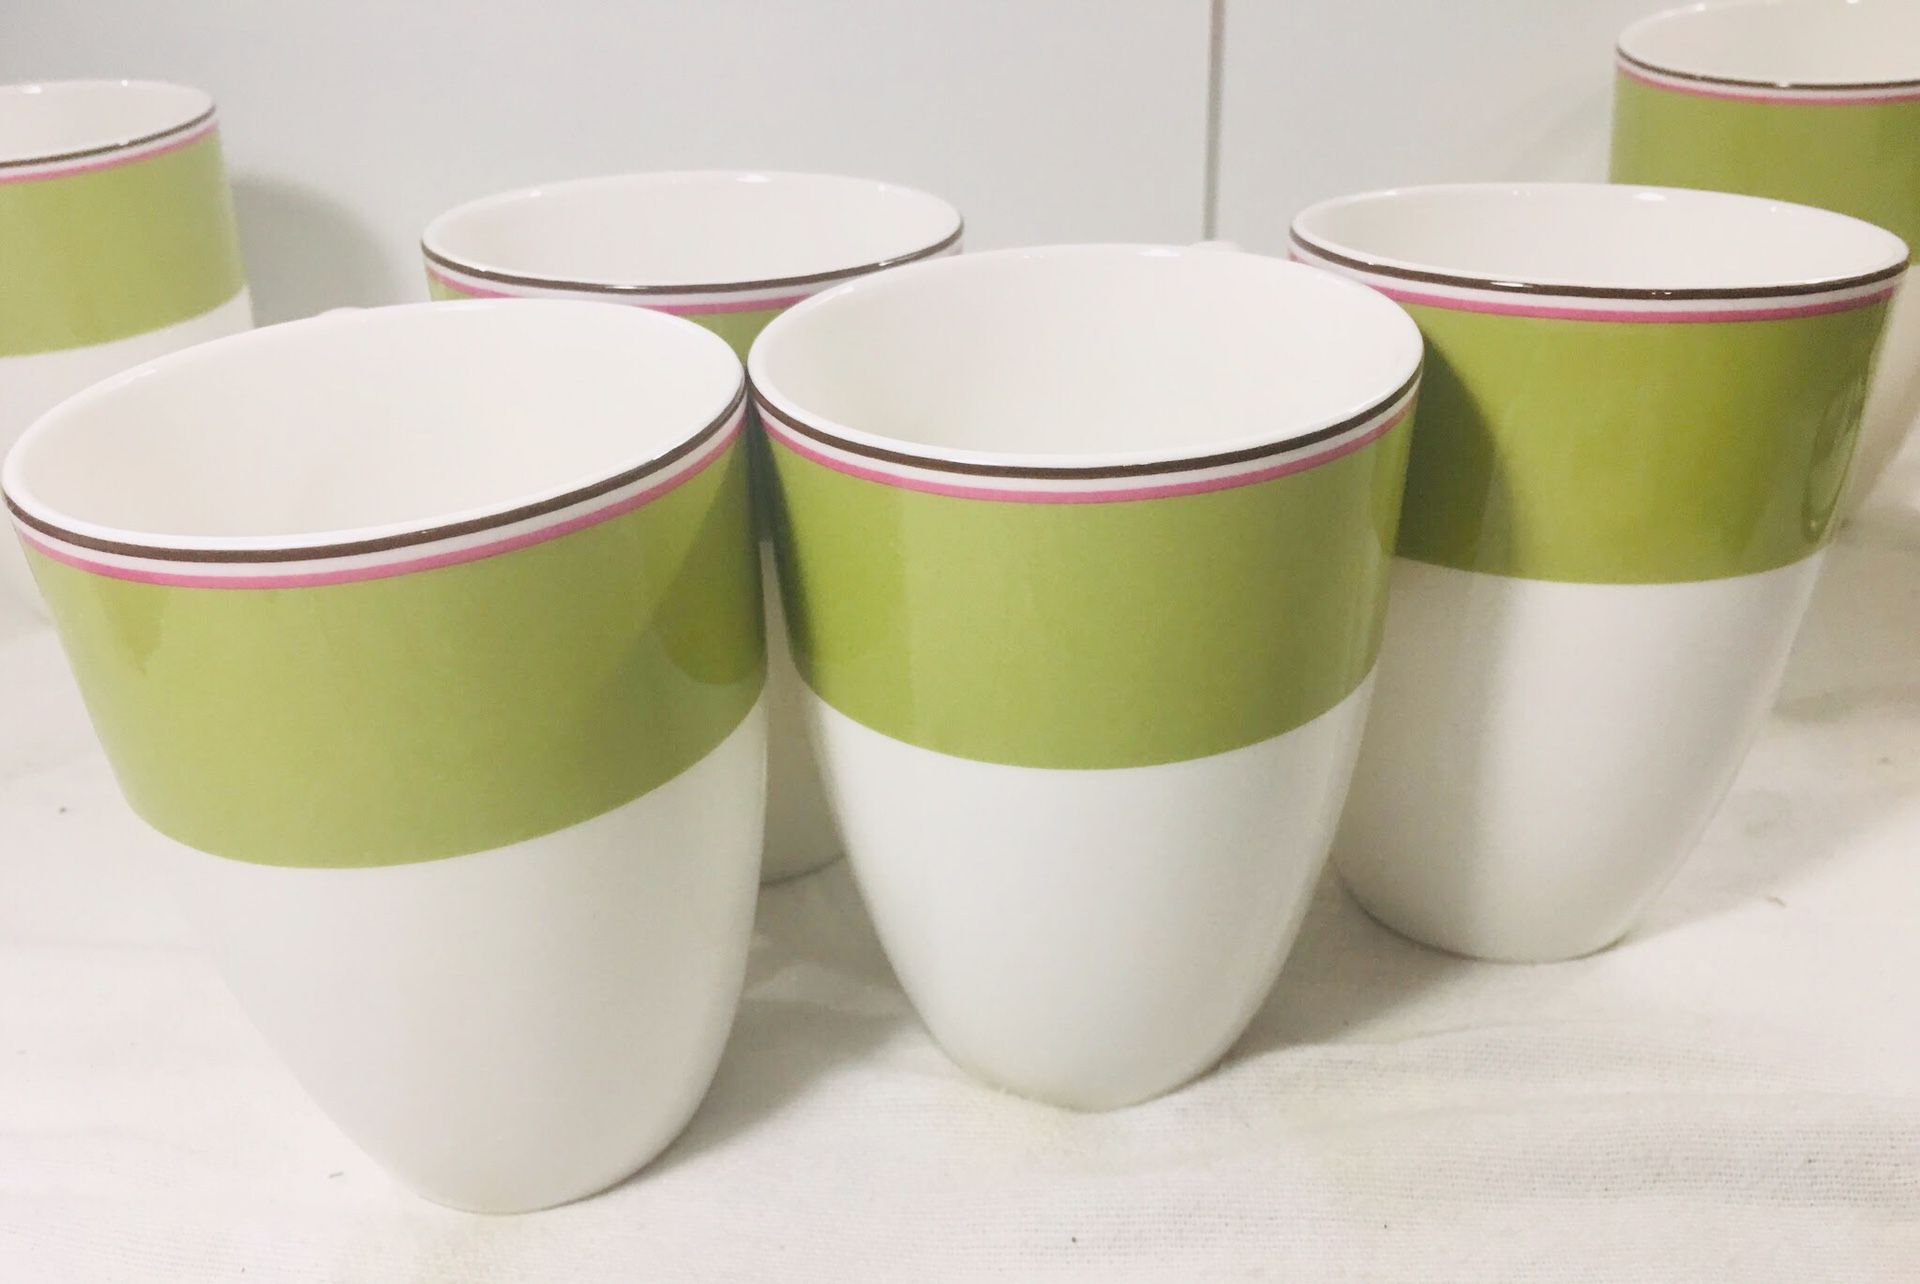 Kate Spade Market Street LENOX China Porcelain GREEN Coffee Tea Cup Mug Set  of 4 for Sale in Austin, TX - OfferUp